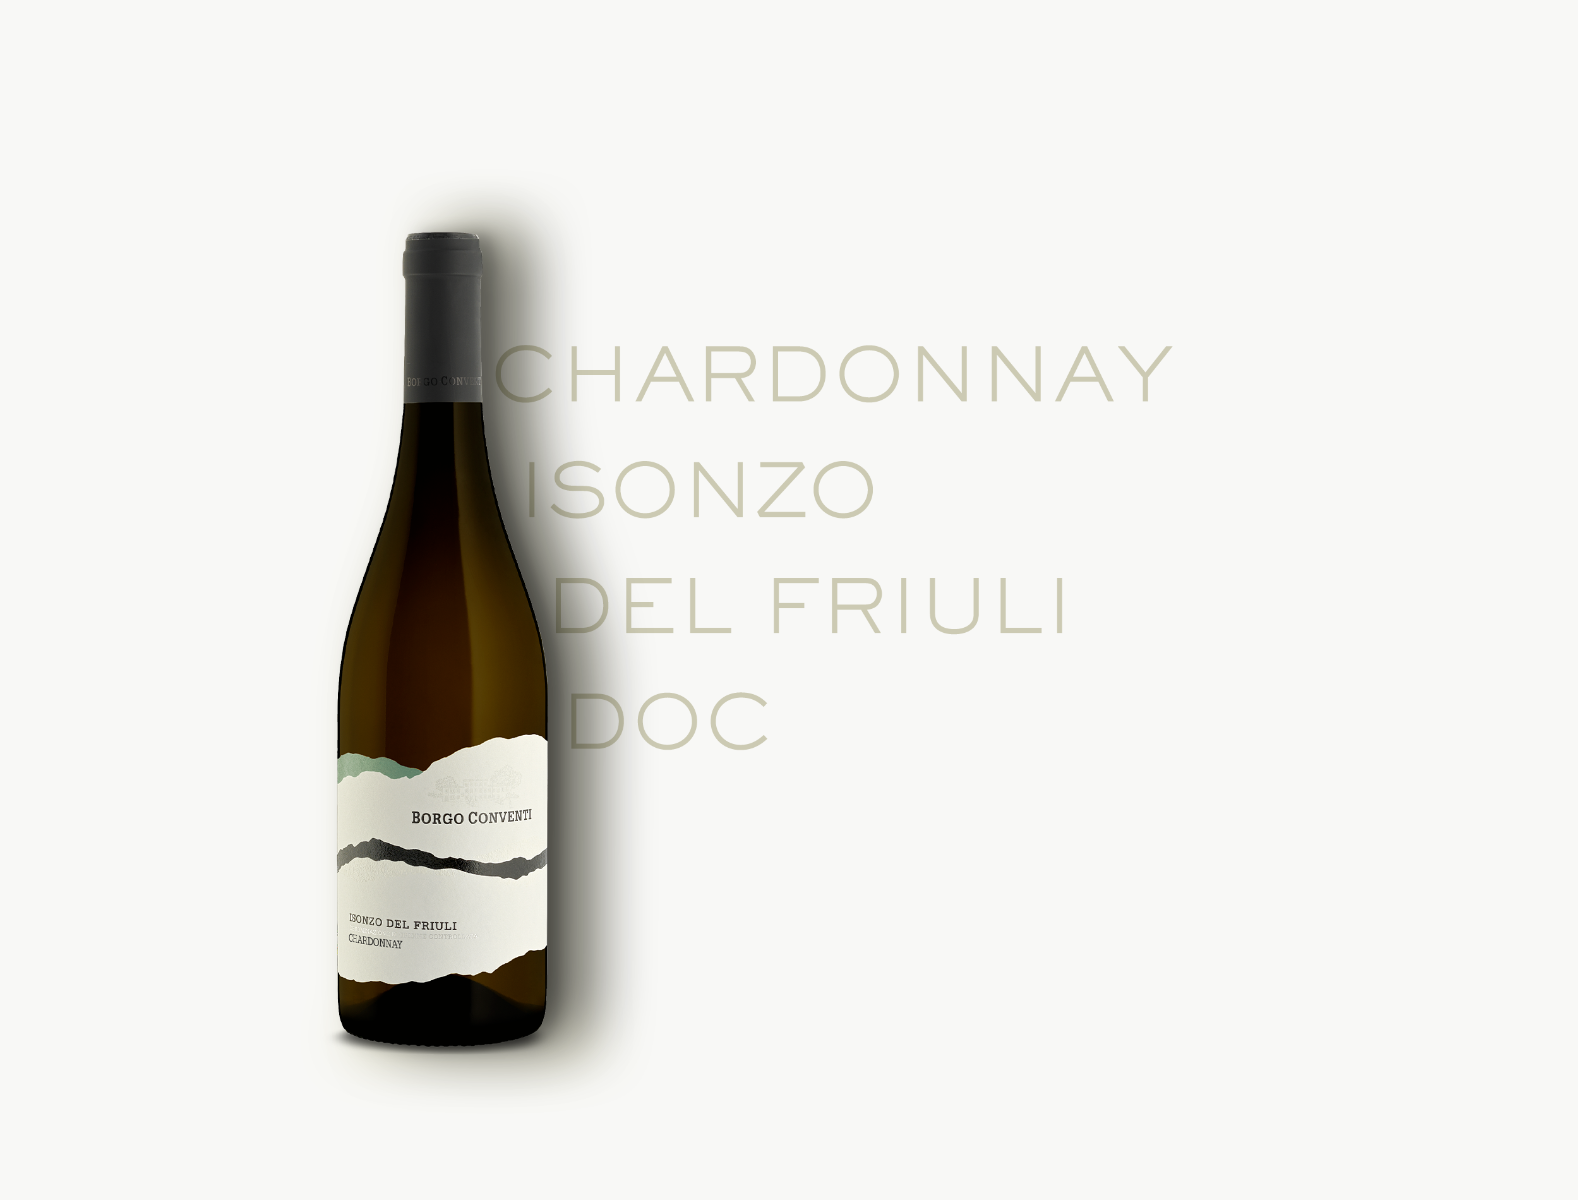 Chardonnay Isonzo del Friuli DOC